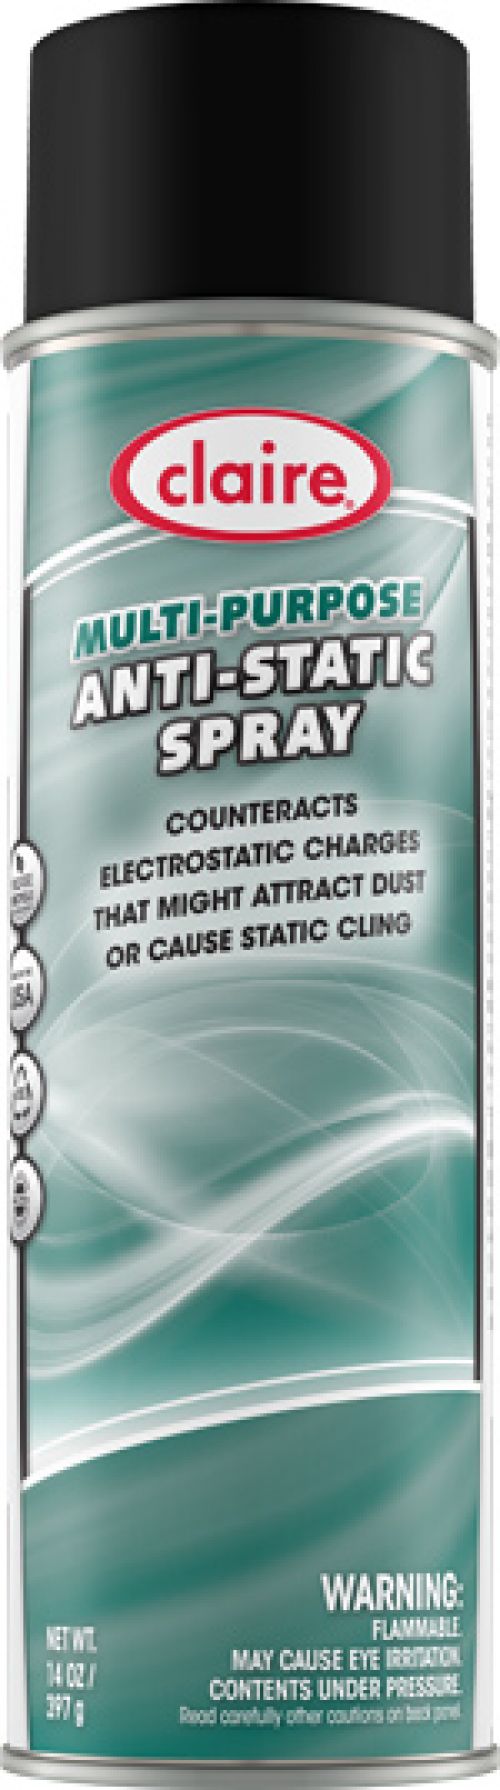 Anti-Static Spray Aerosol